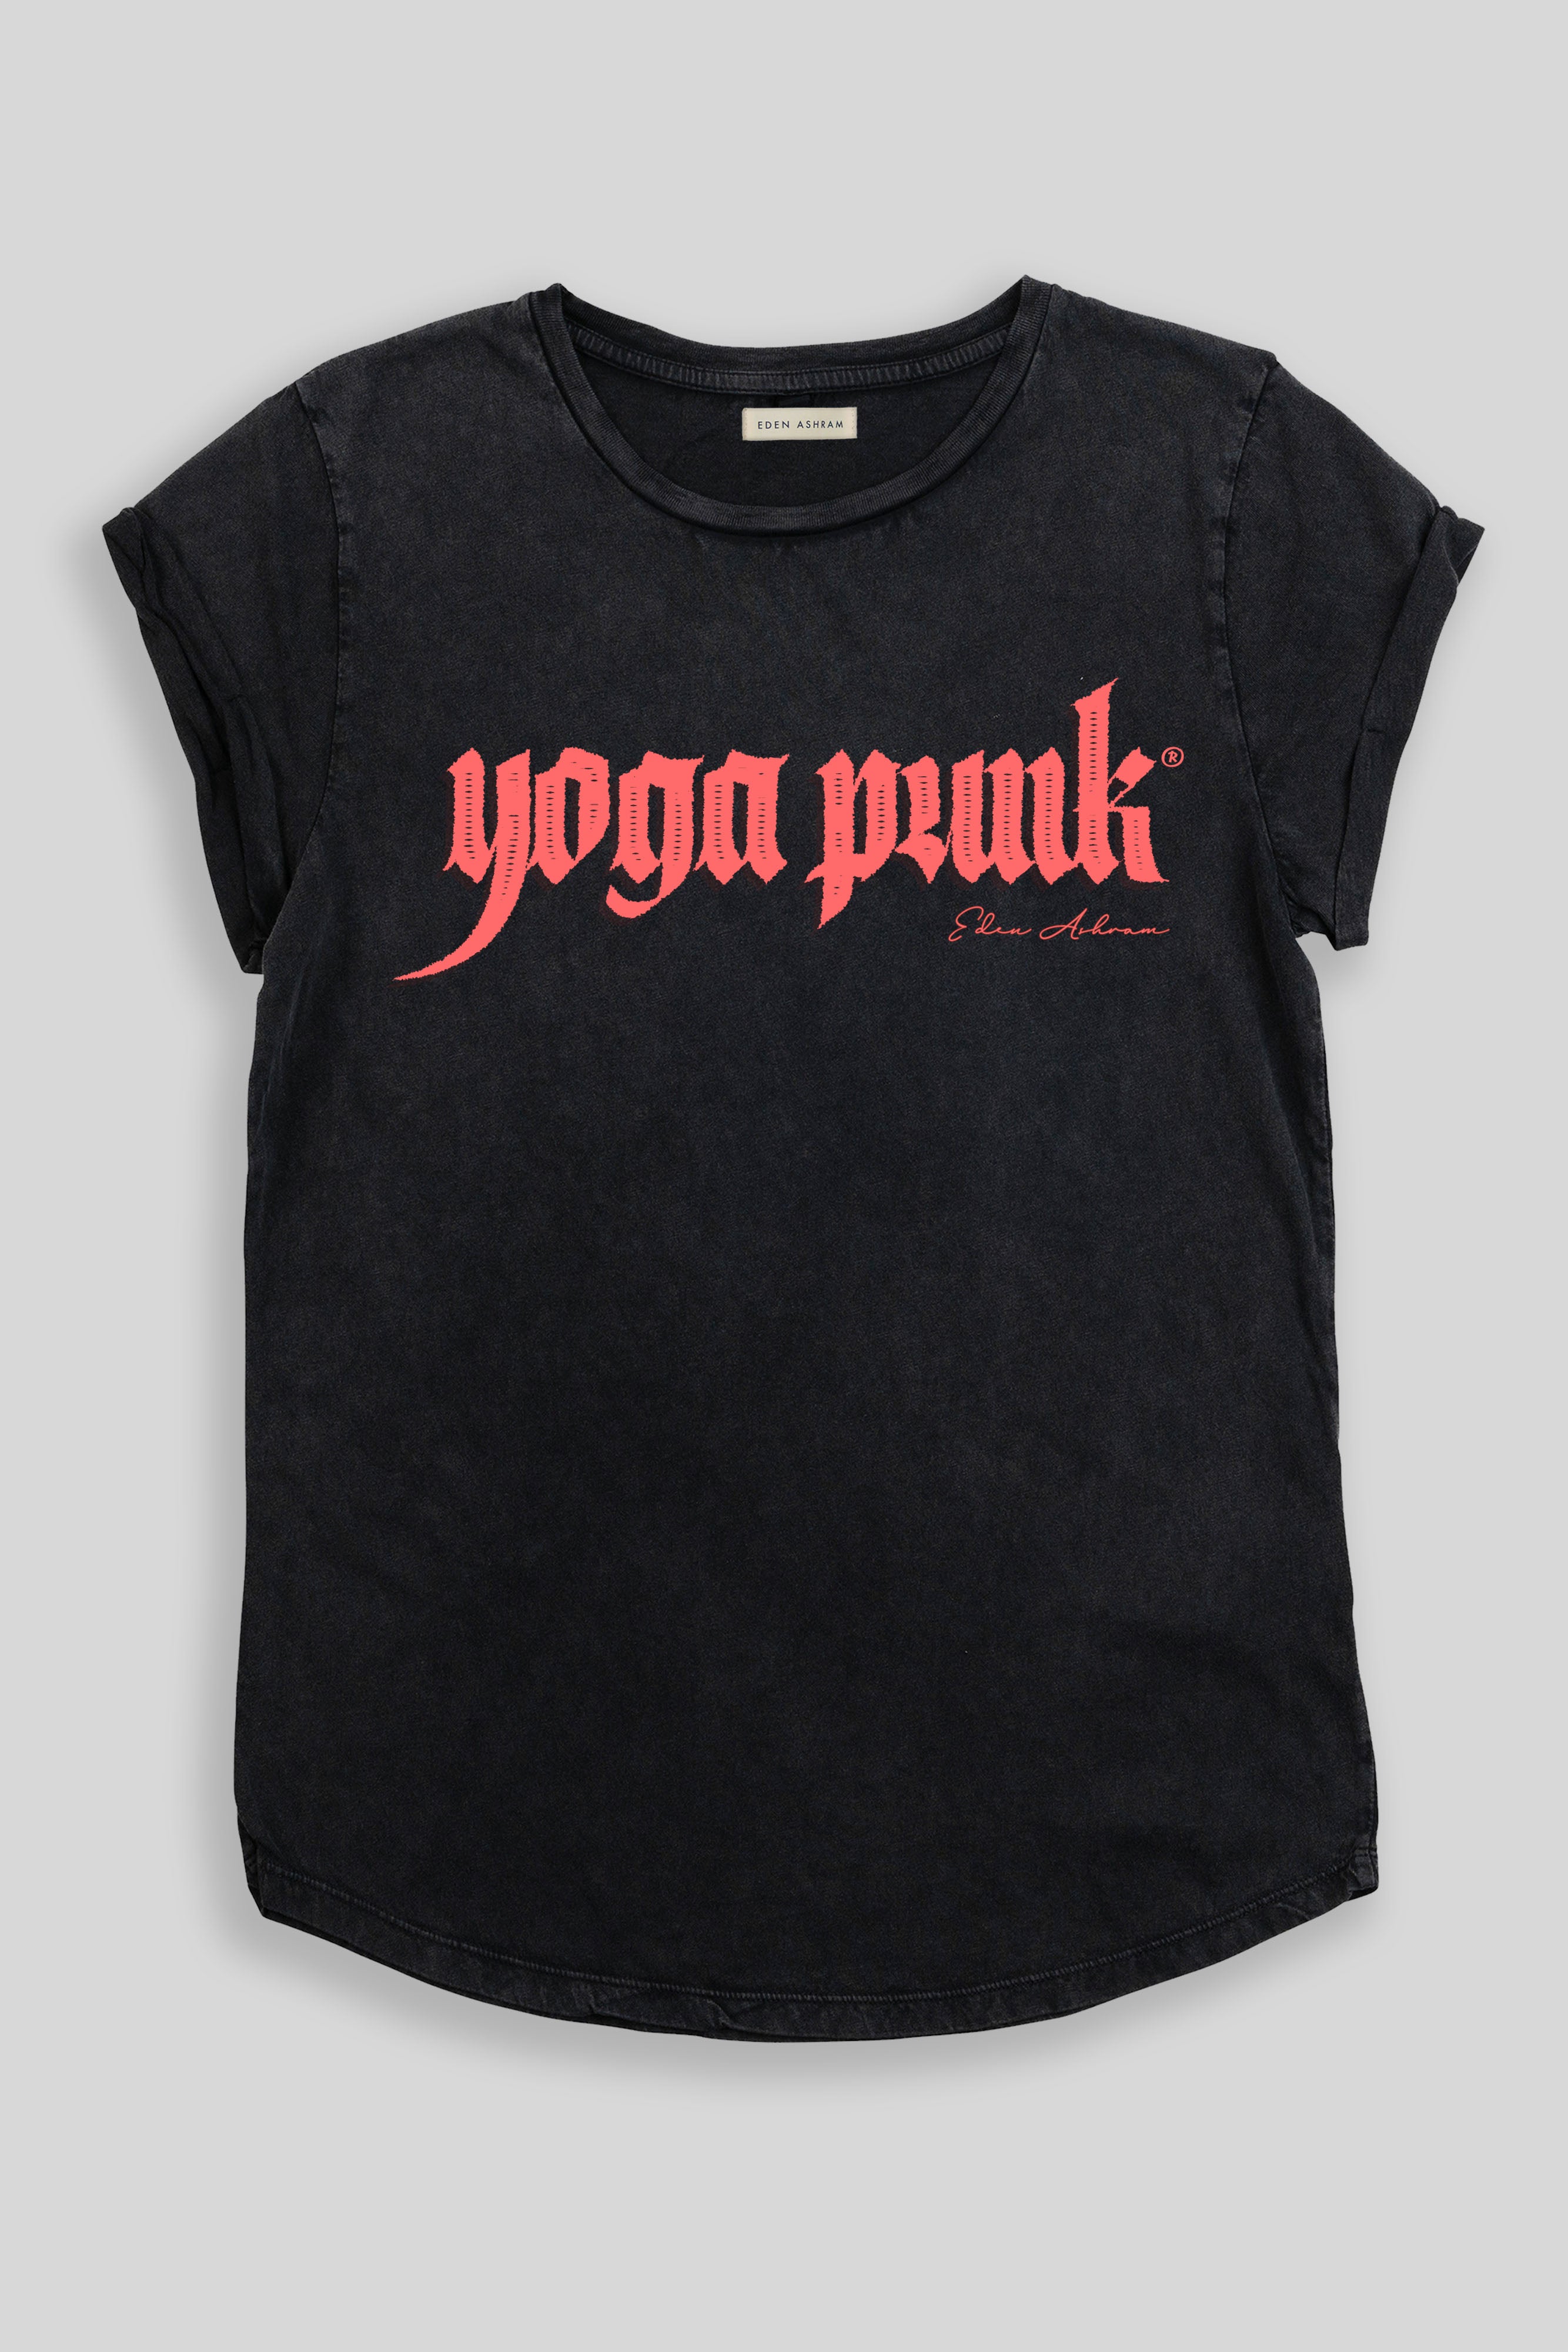 EDEN ASHRAM Yoga Punk Rolled Sleeve T-Shirt Stonewash Black